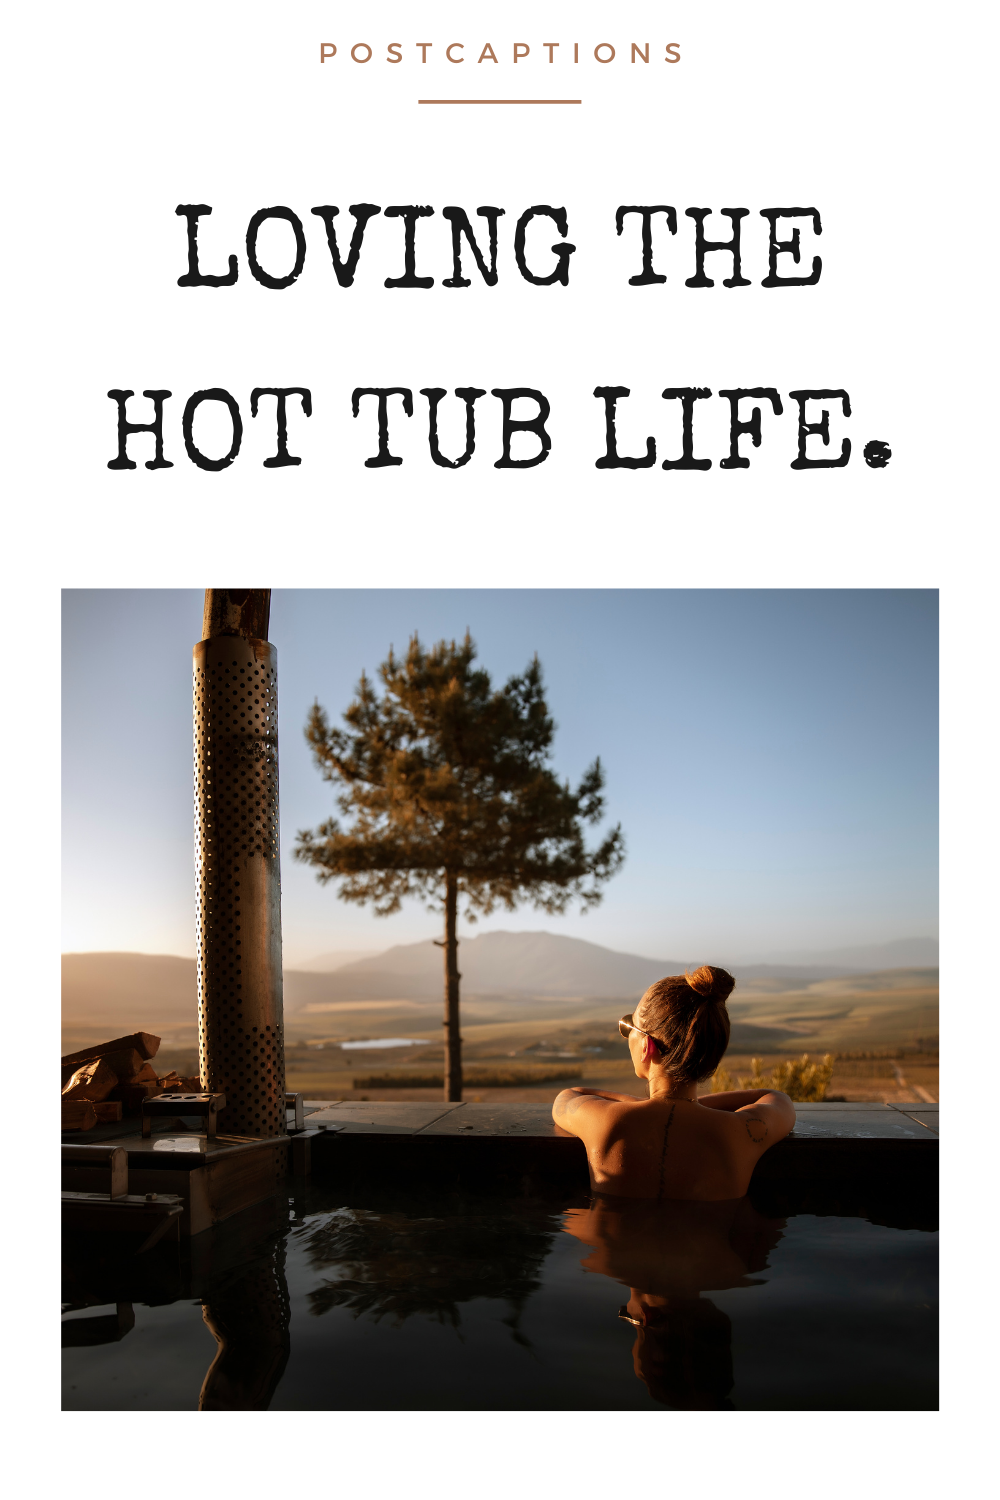 Hot tub captions for Instagram